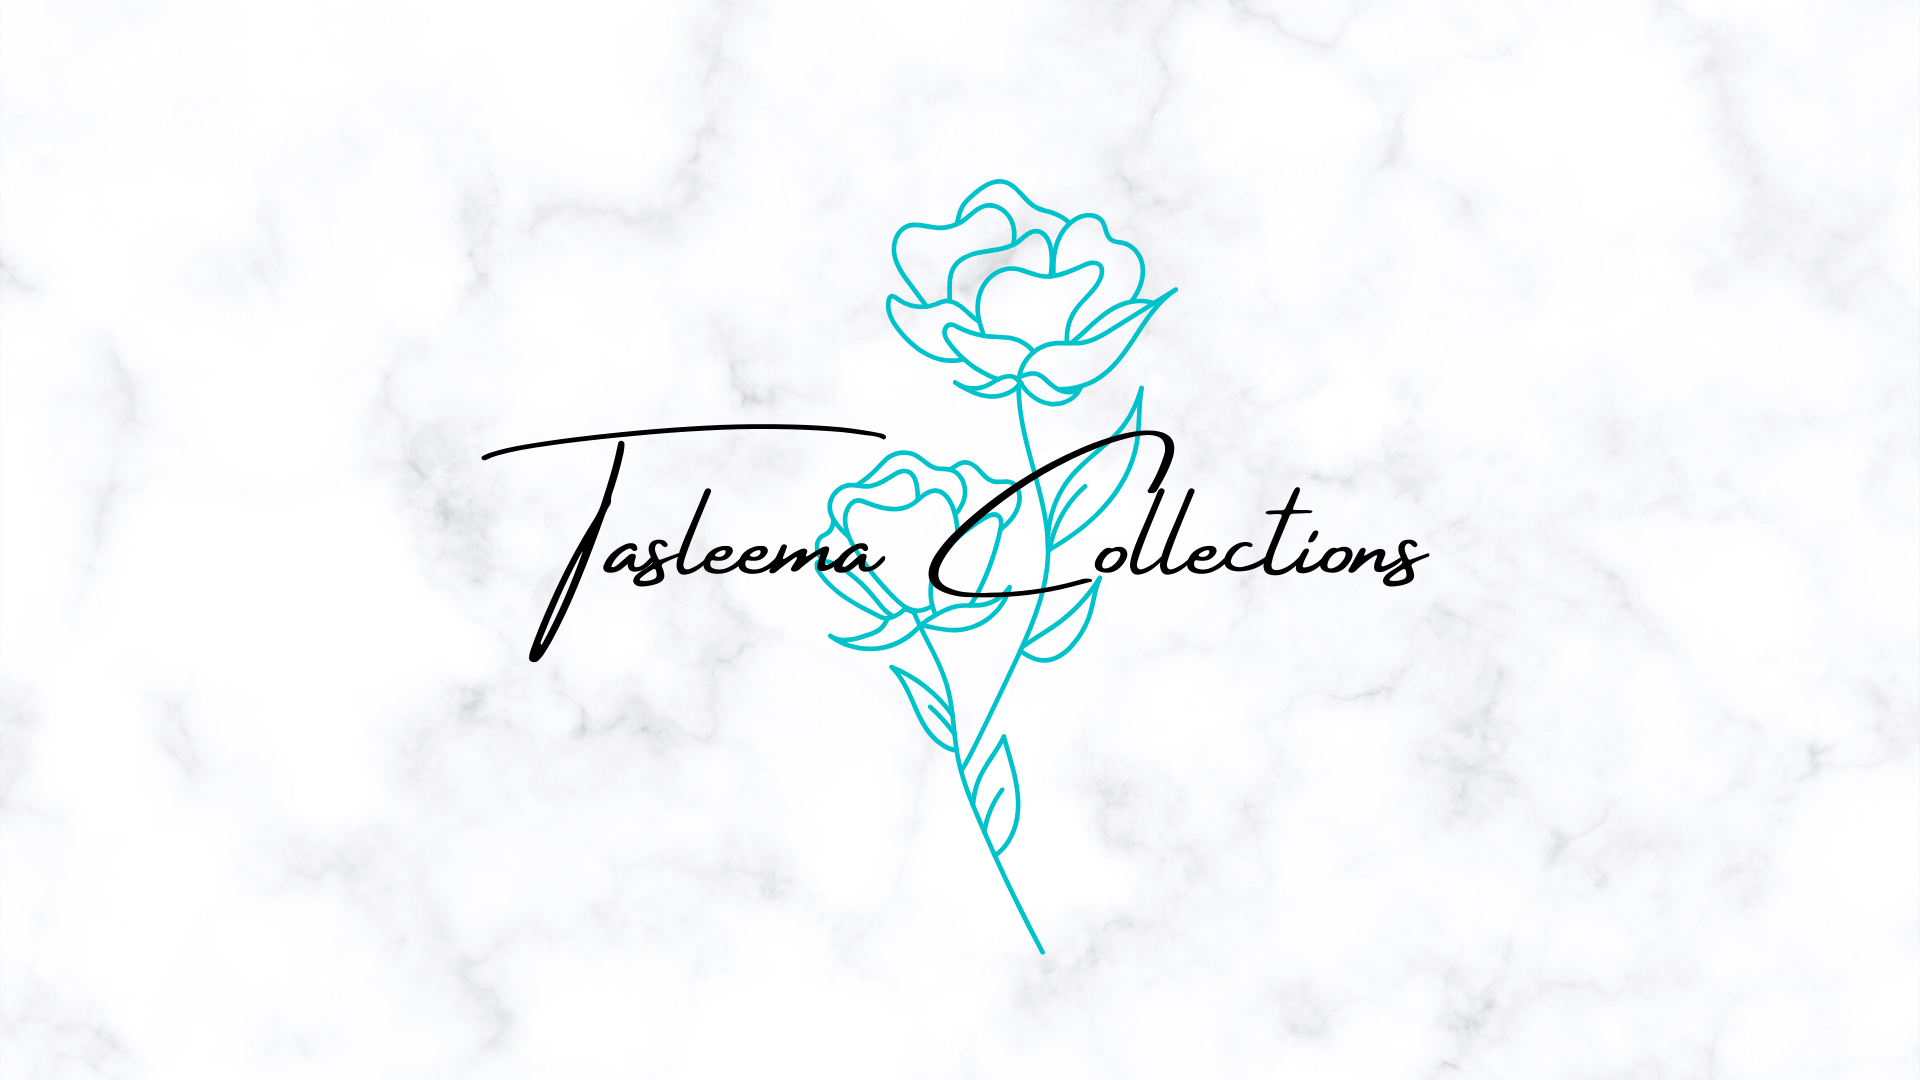 TasleemaCollections – Tasleema Collections